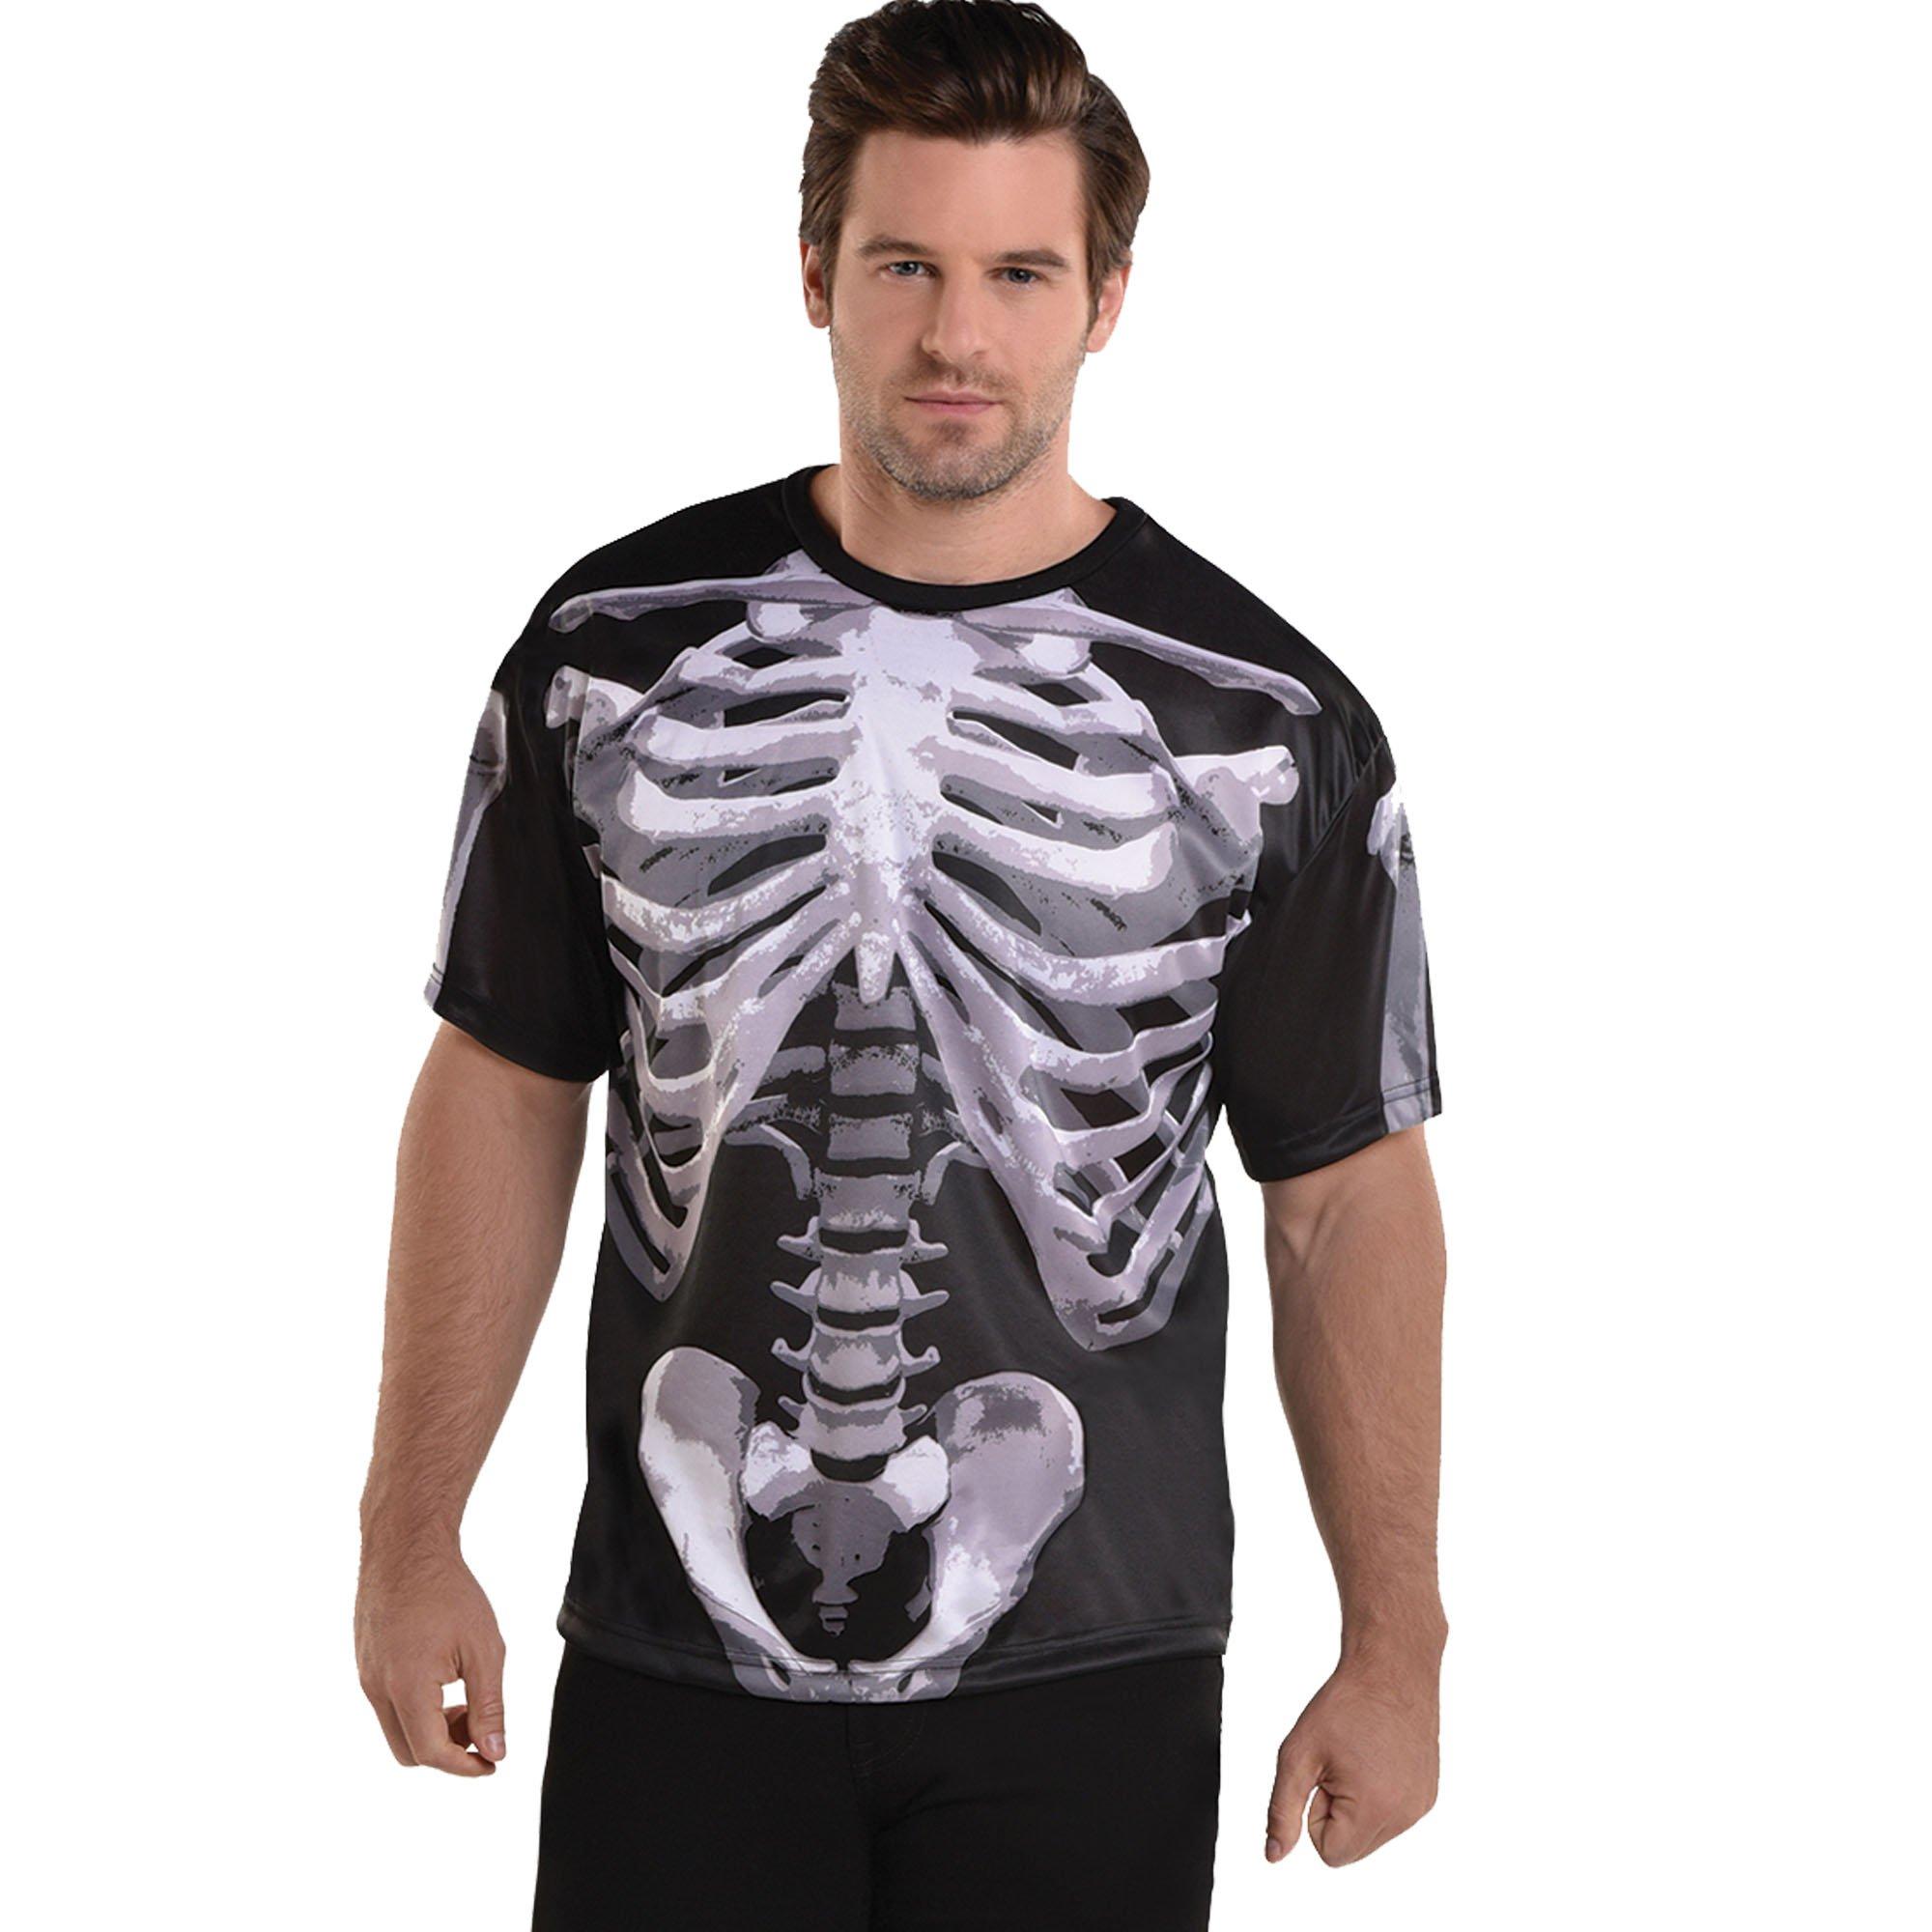 Skeleton costume T-shirt - Toys - ACCESSORIES - Boy - Kids 